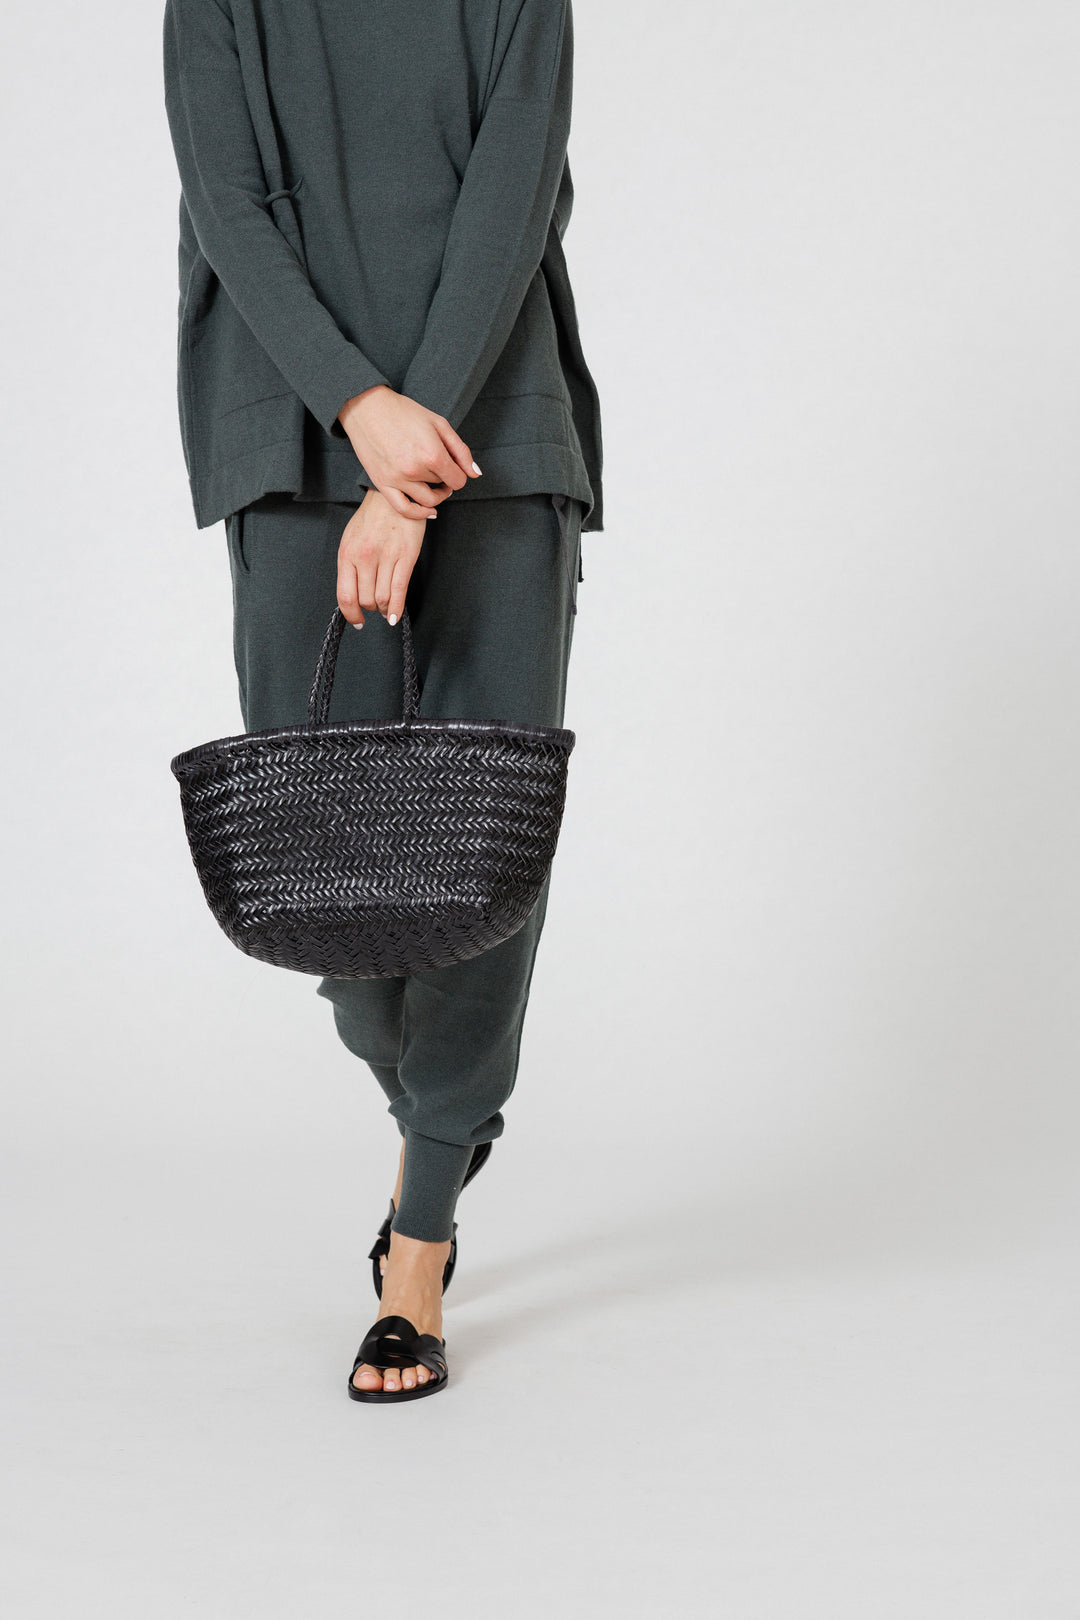 Dragon Diffusion woven leather bag handmade - Triple Jump Small Black